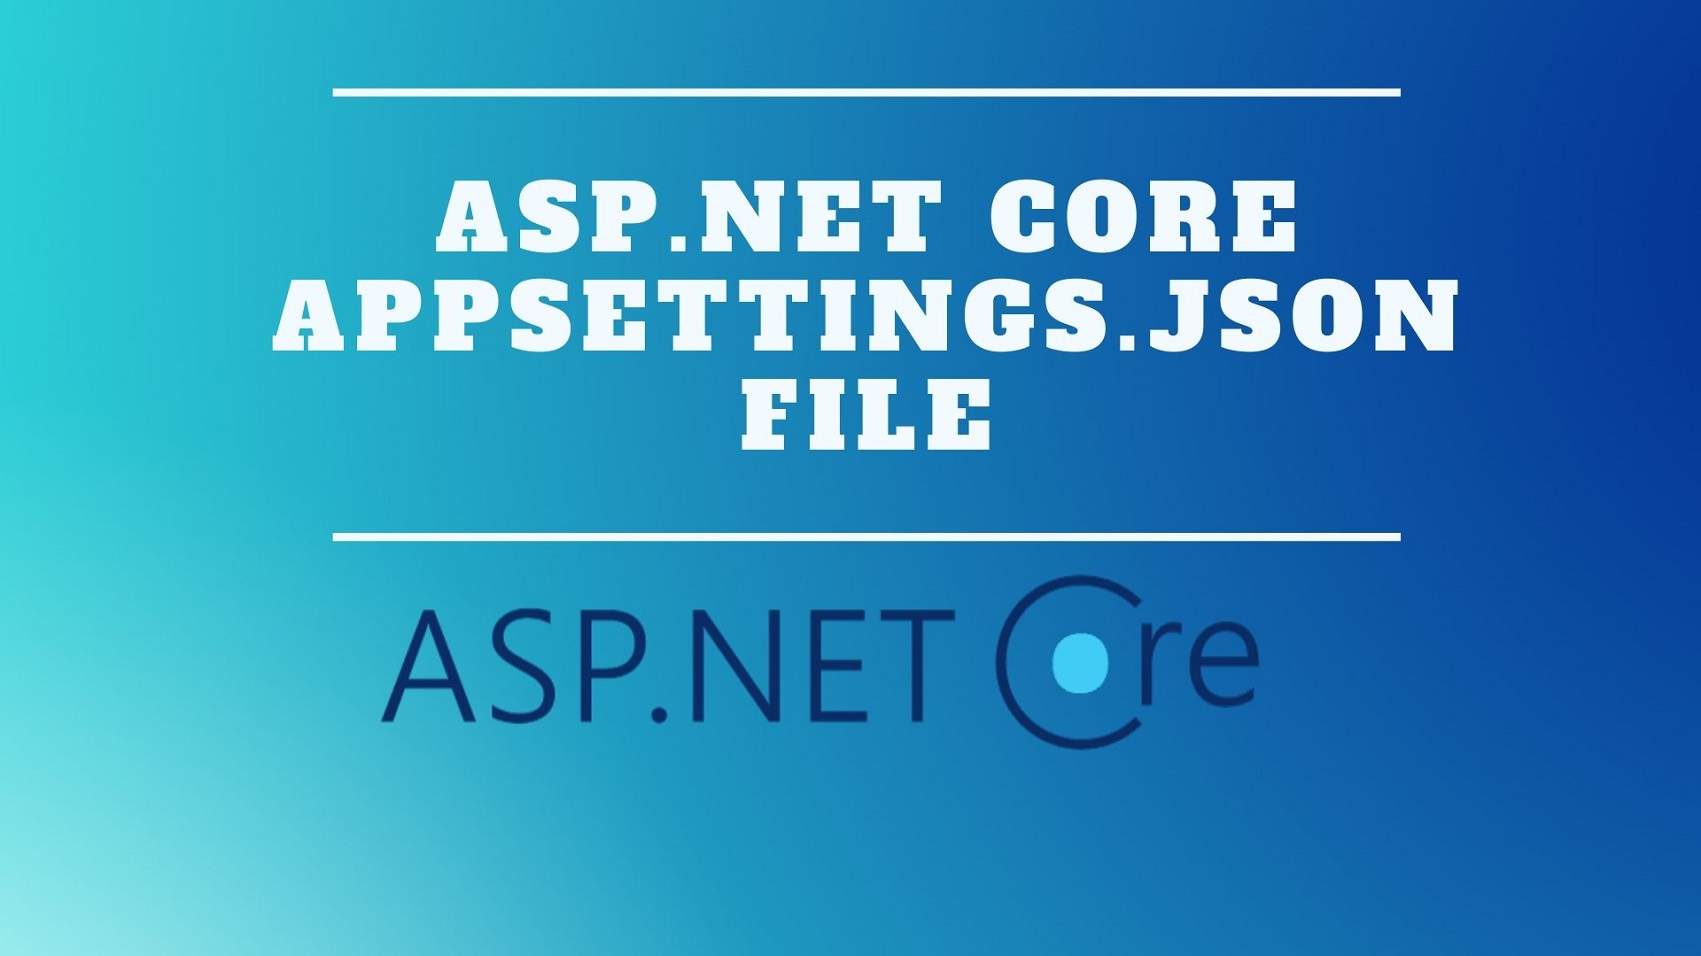 ASP.NET Core appsettings.json file